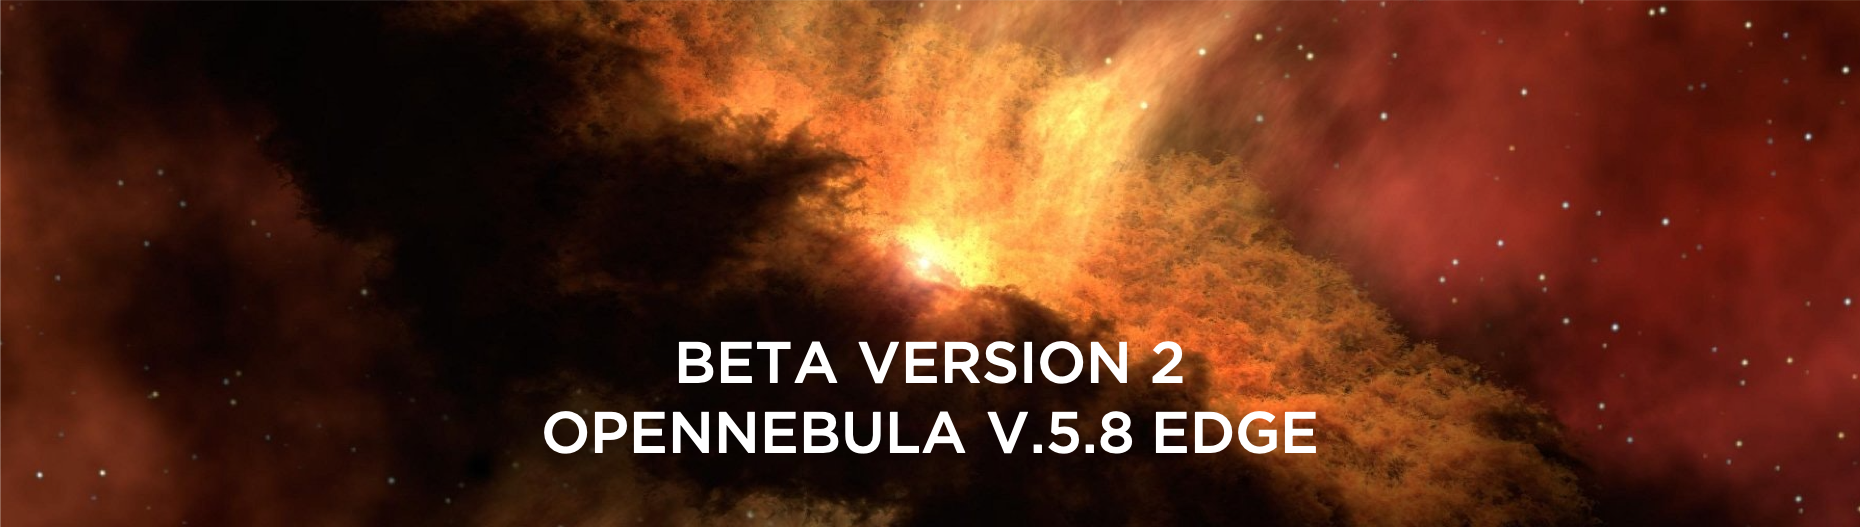 beta2 5.8